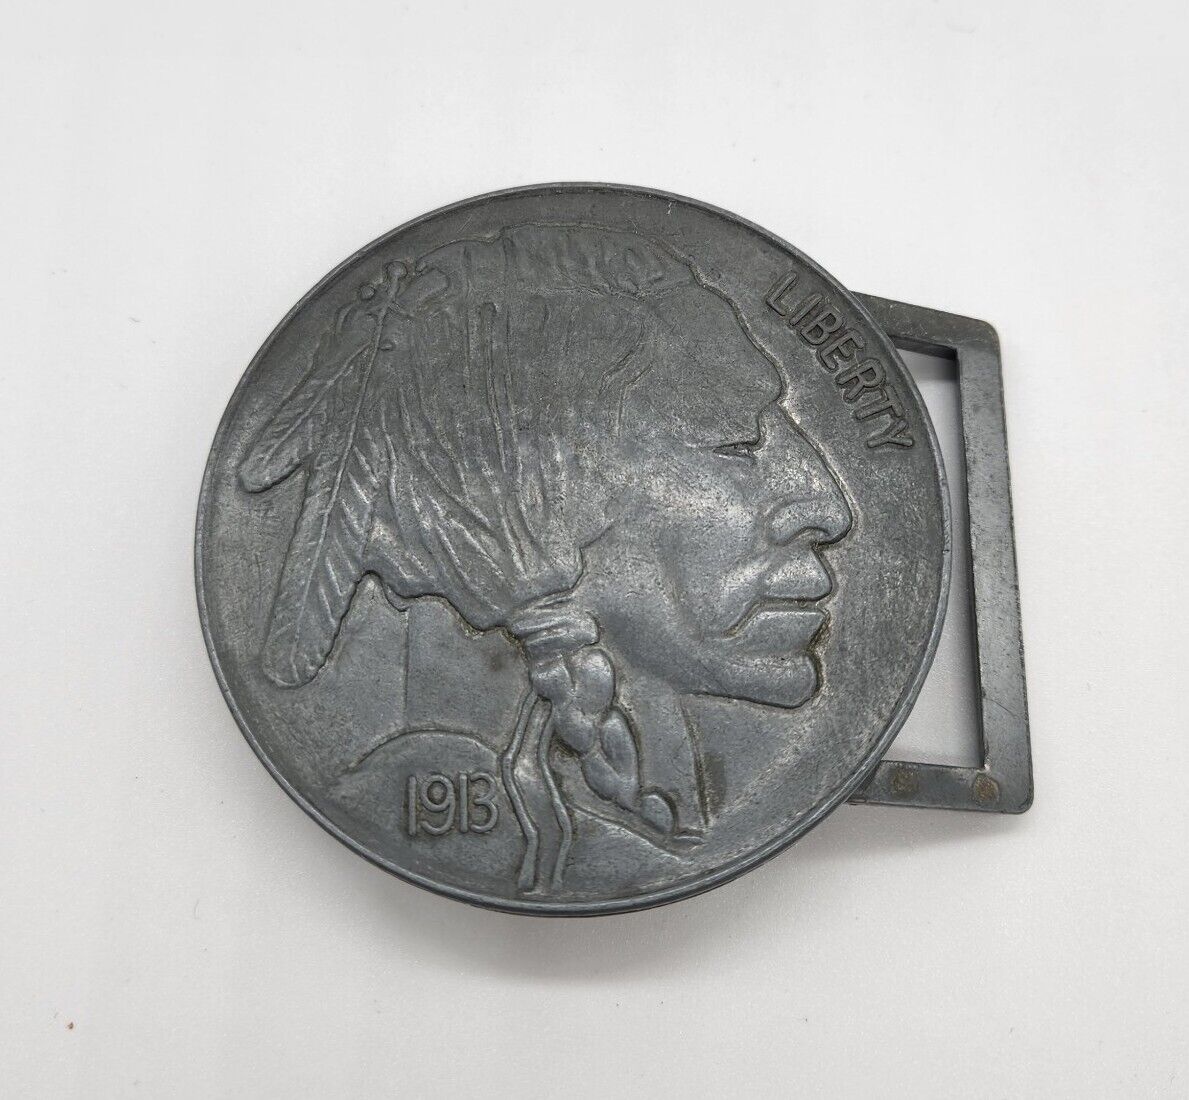 Native American Indian Head 1913 Coin Replica Metal Belt Buckle Vtg USA 